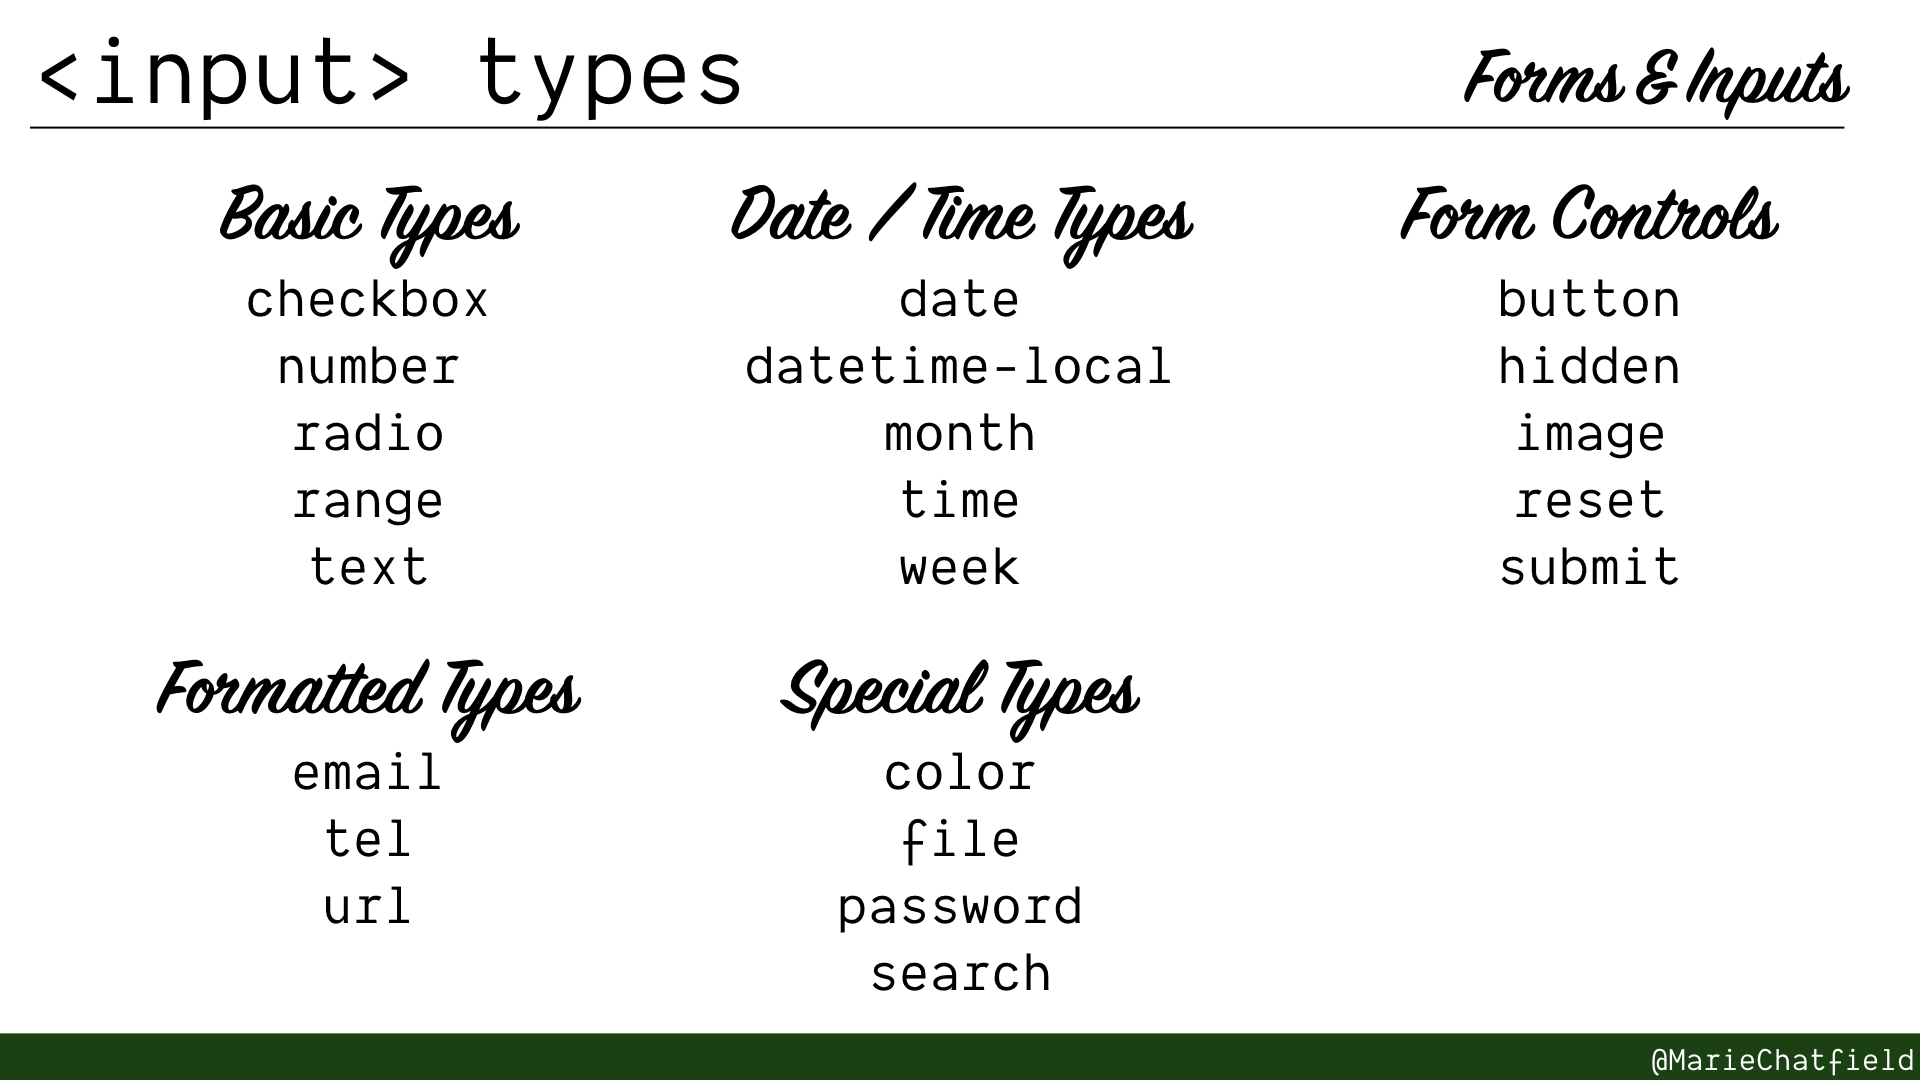 Slide of input types